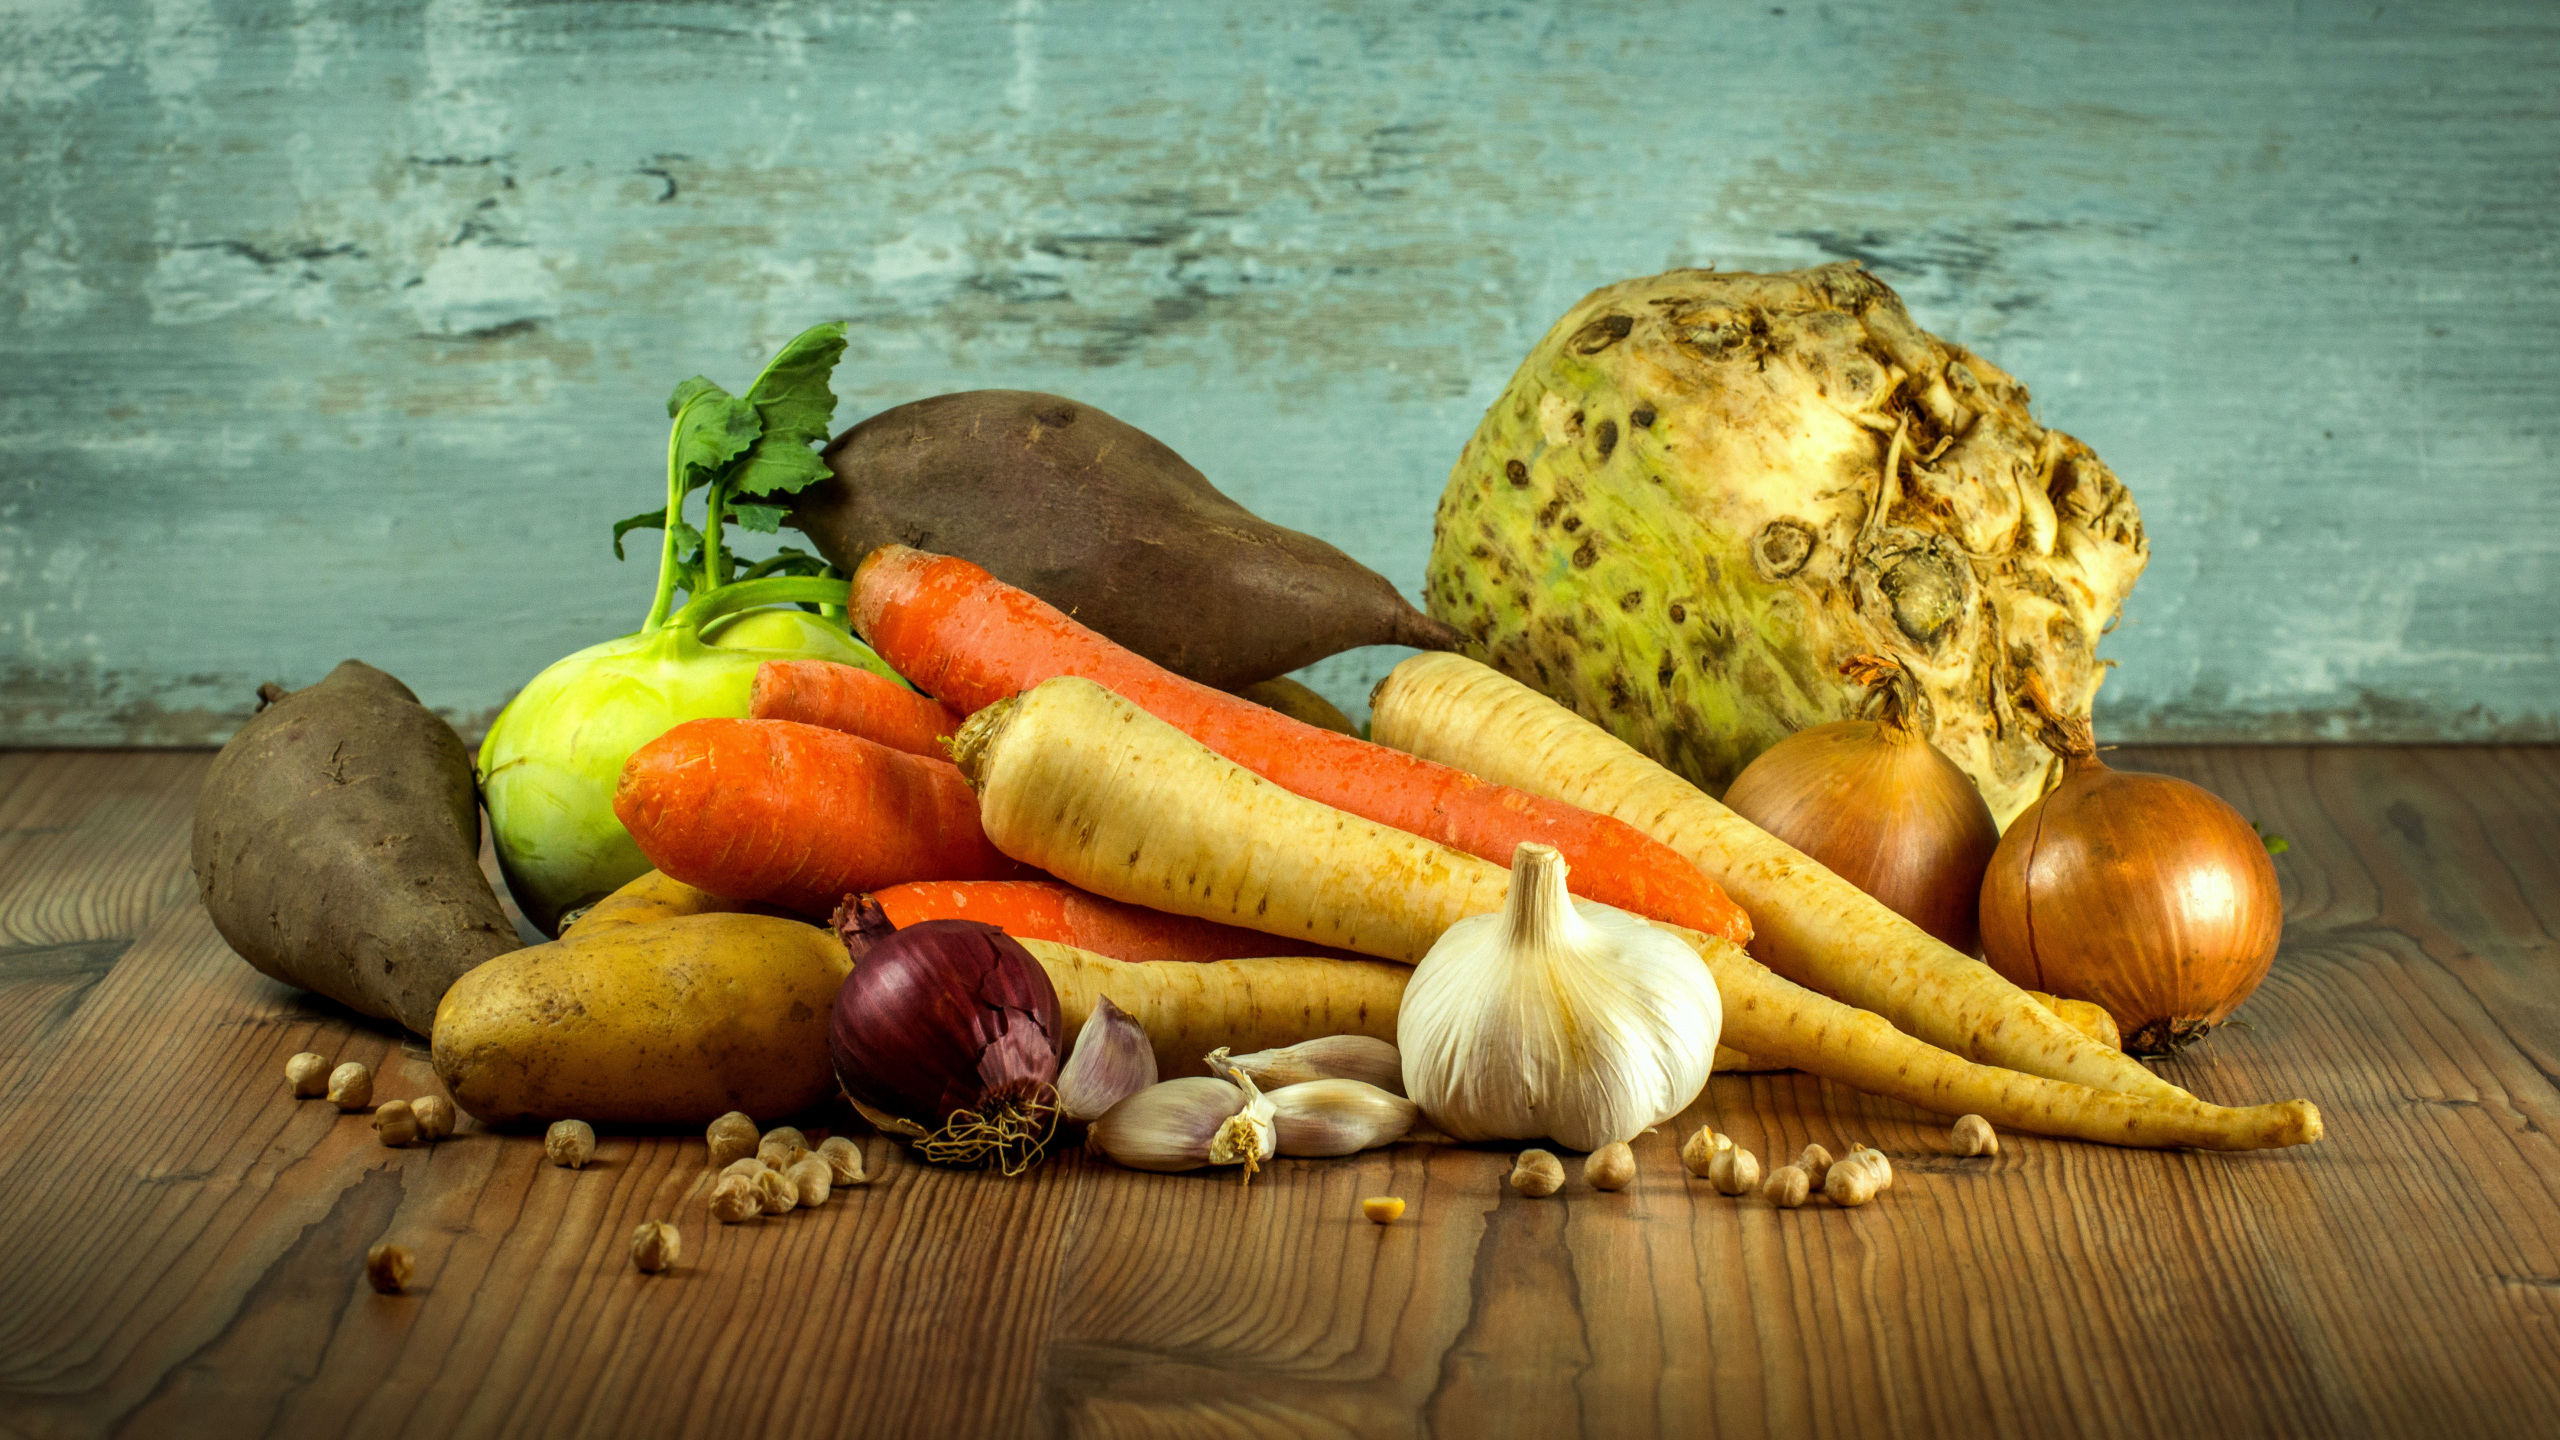 Vegetables | Creative Commons CC0 1.0 via Pixabay